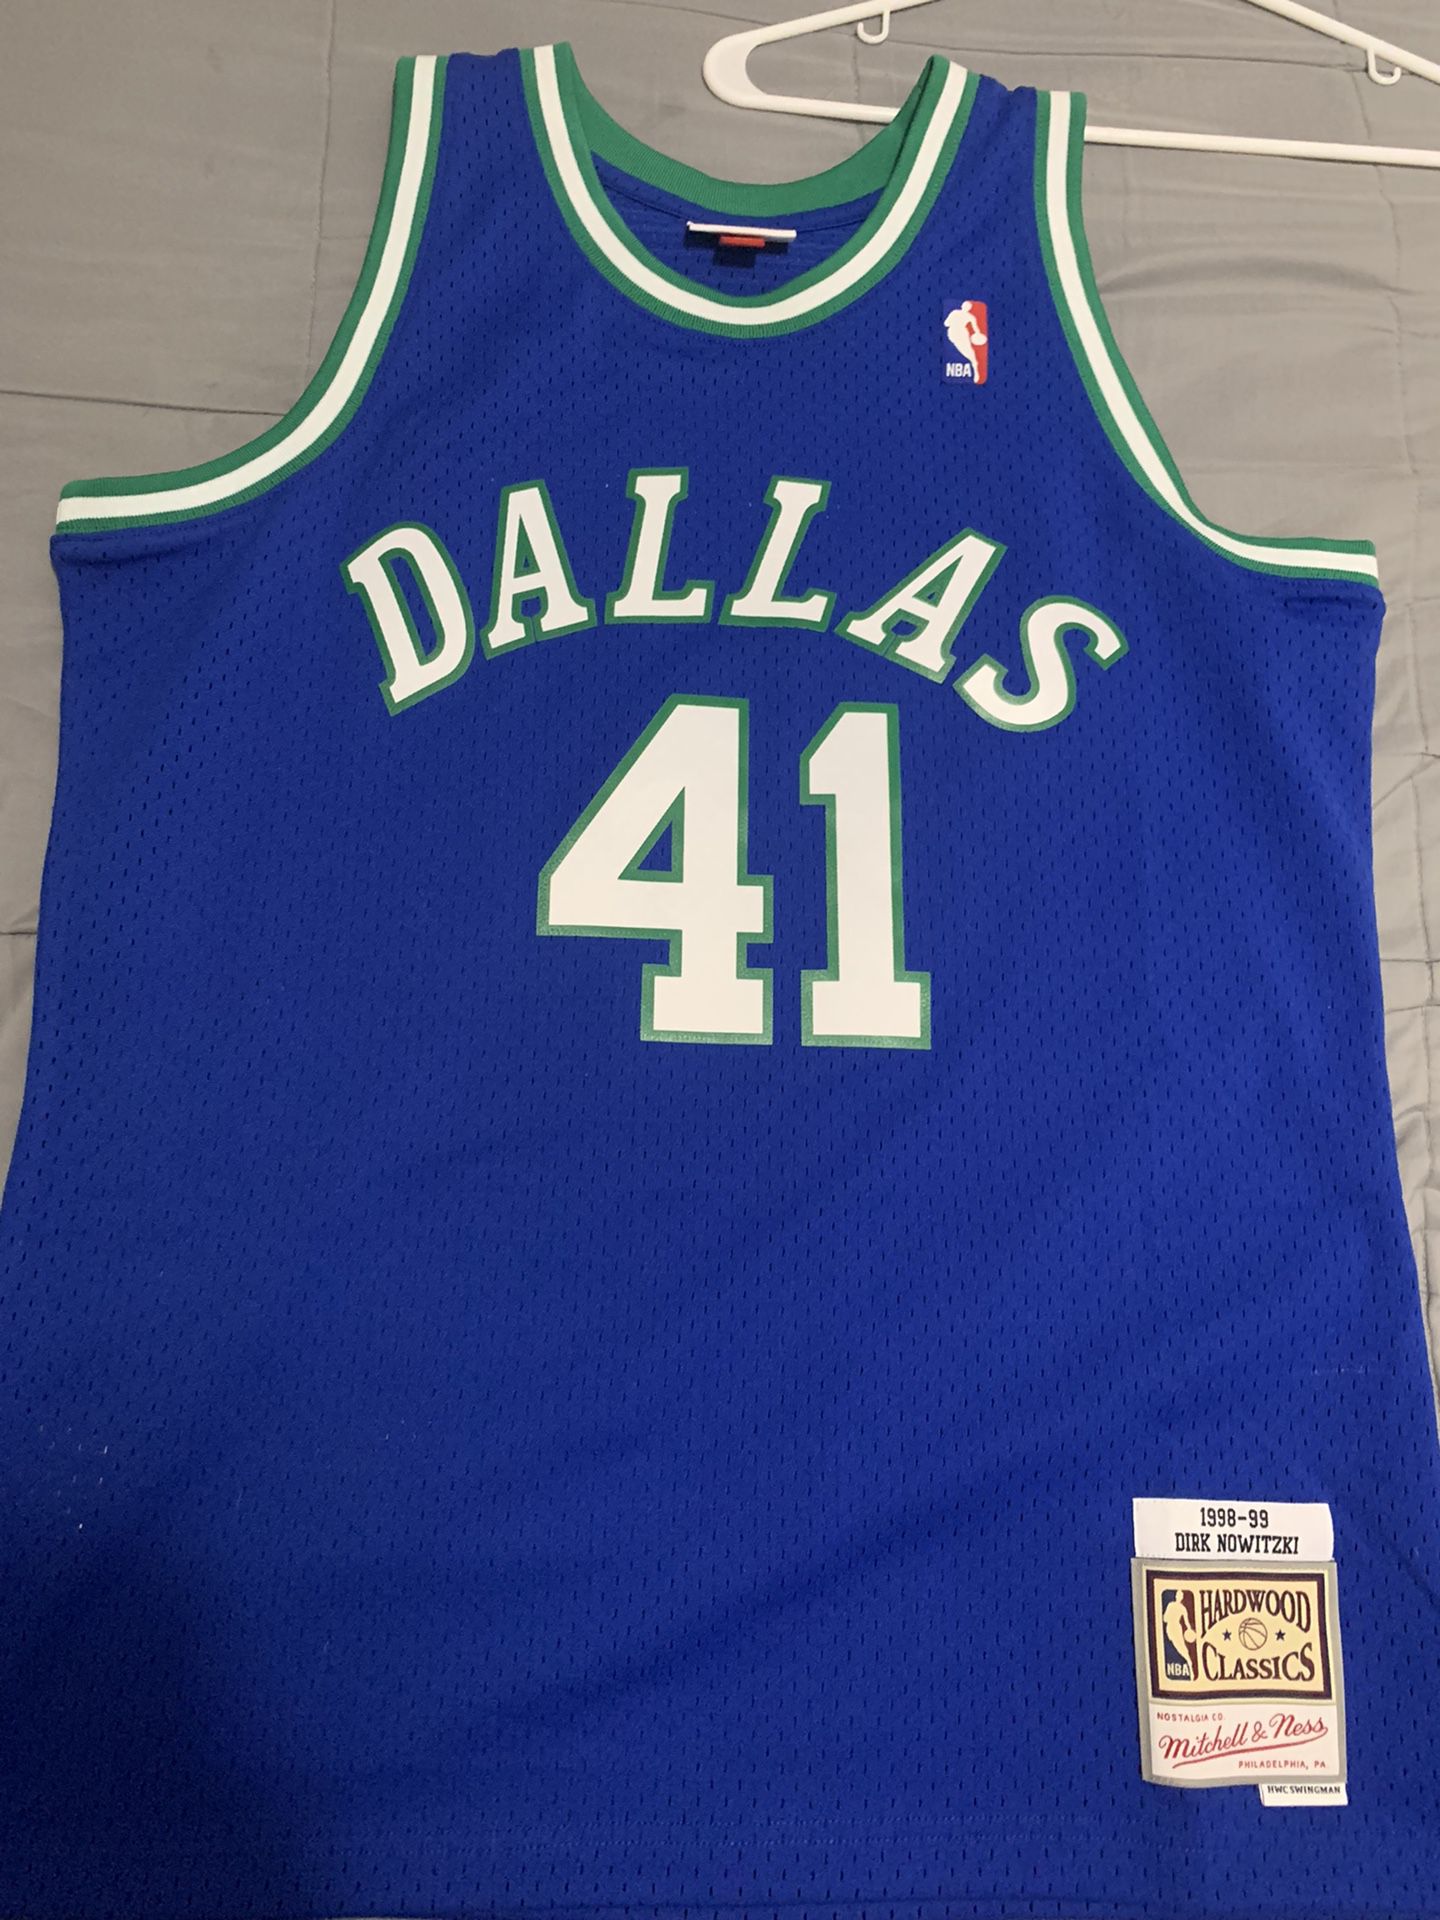 Dirk Nowitzki Authentic Nike Jersey for Sale in Dallas, TX - OfferUp